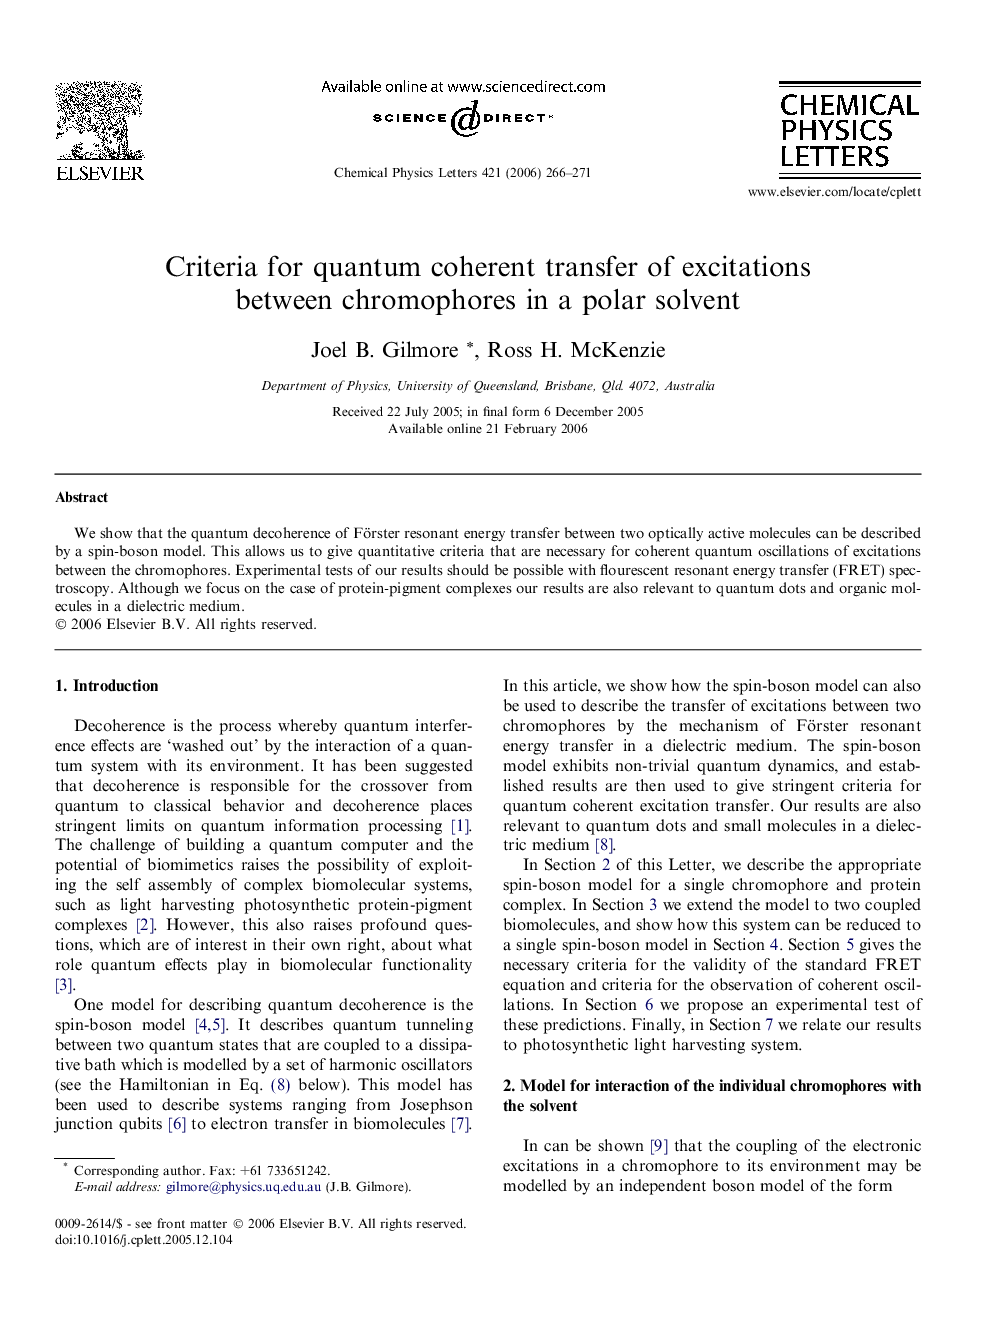 Criteria for quantum coherent transfer of excitations between chromophores in a polar solvent